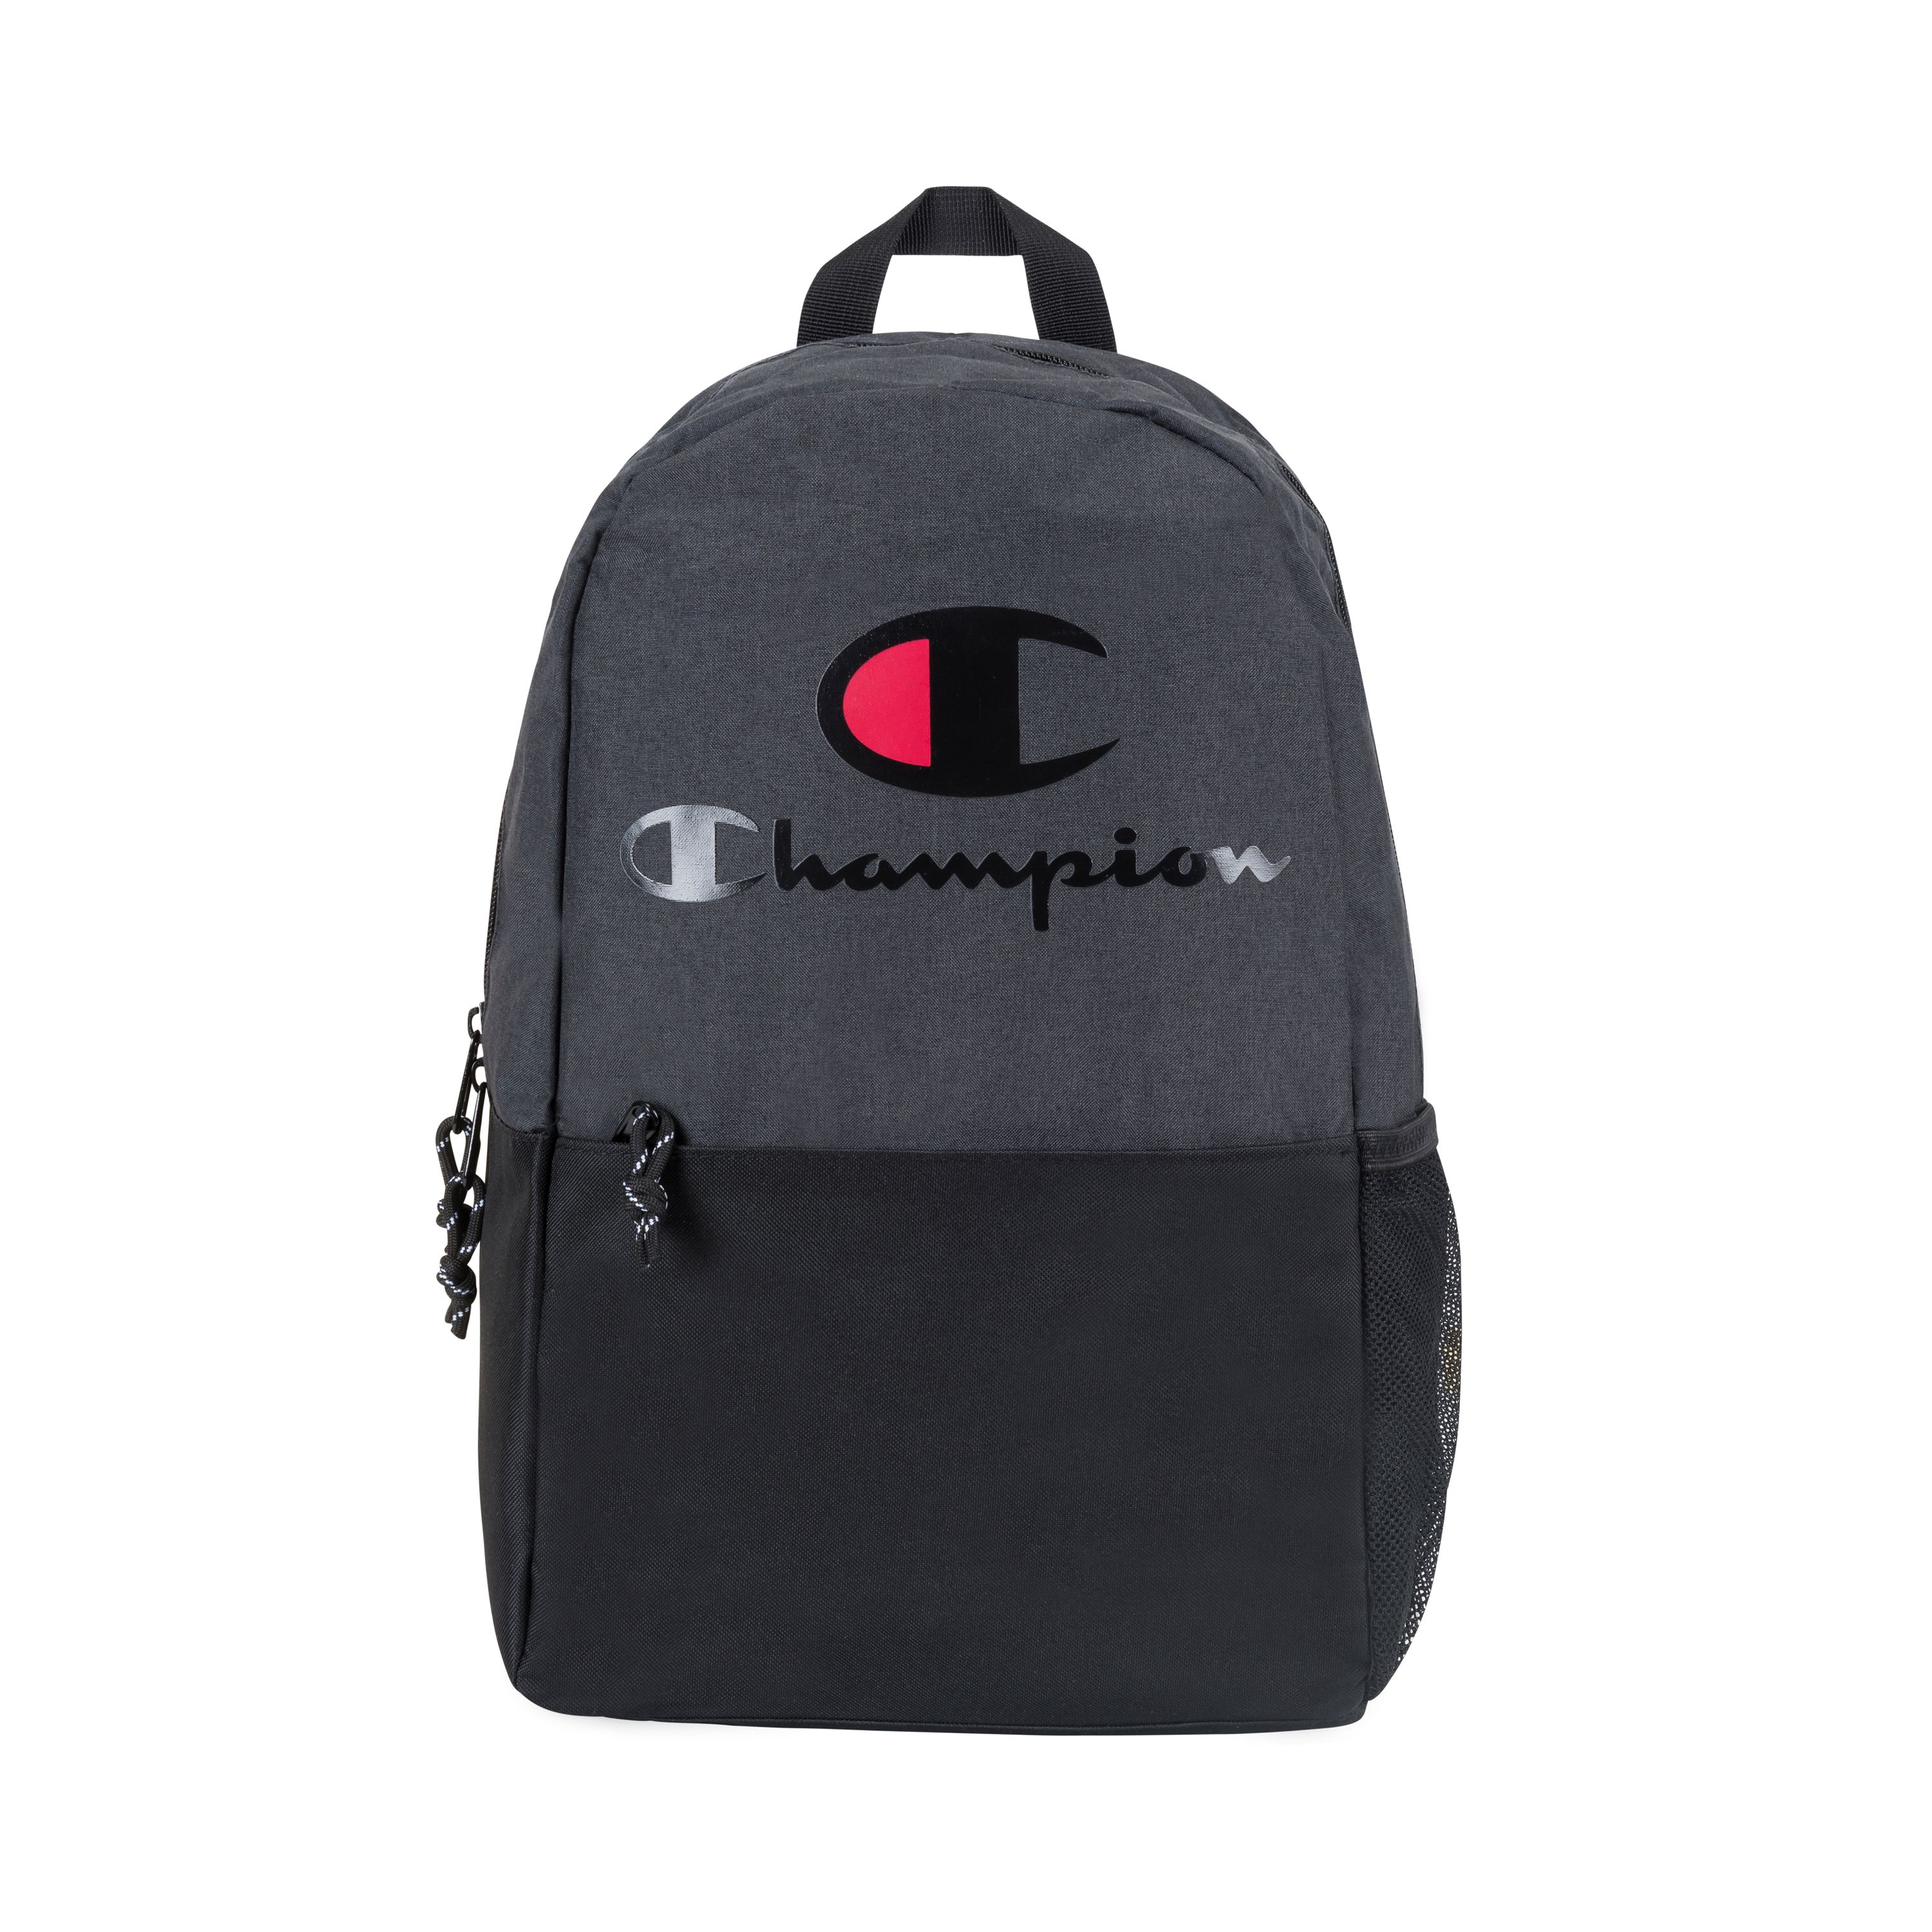 Champion Unisex Adult Velocity Backpack Dark Grey - image 1 of 2